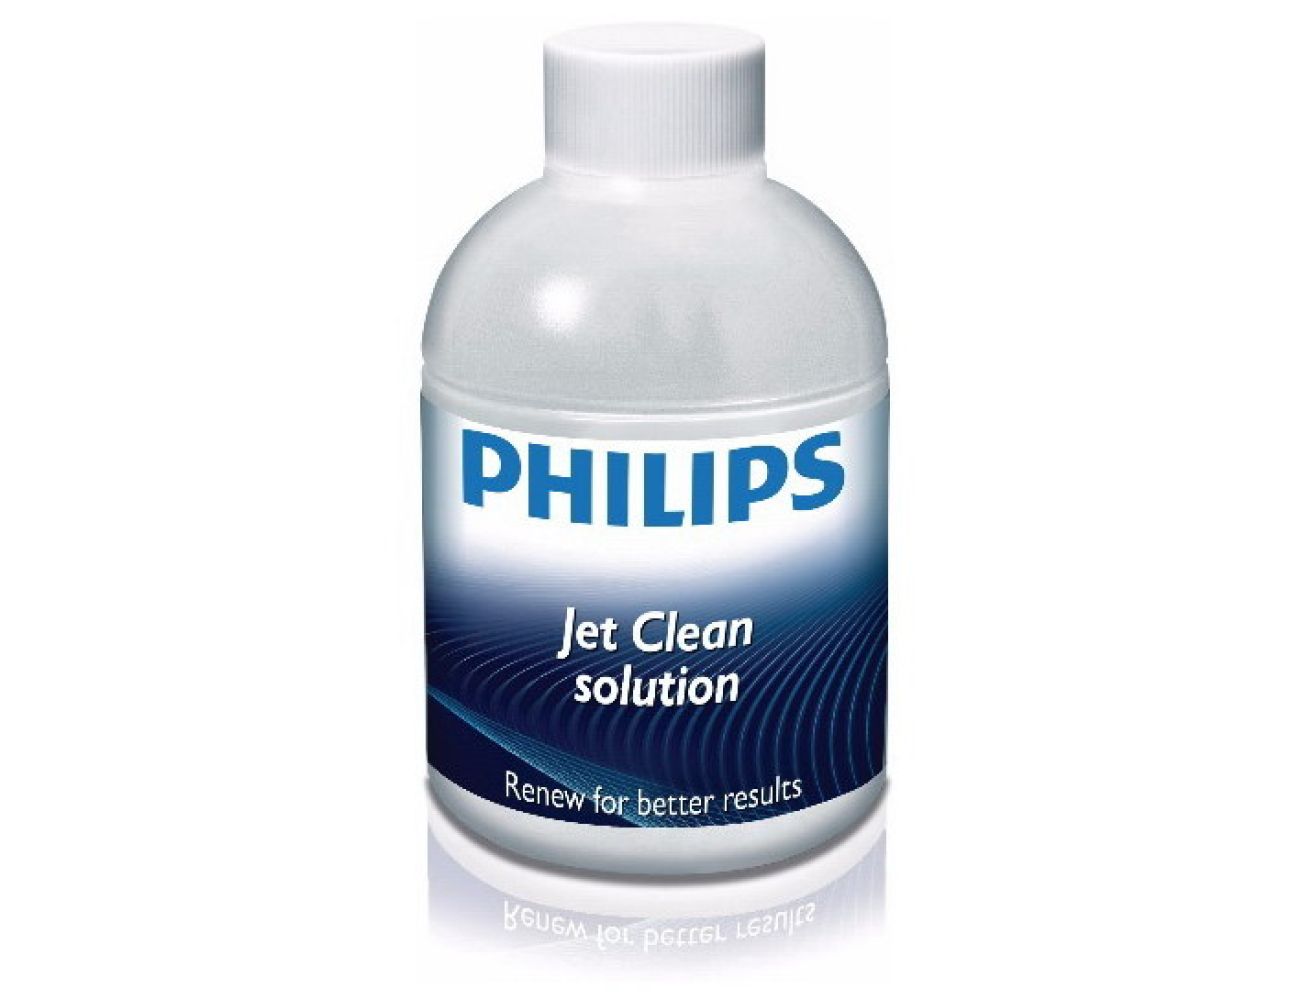 Картридж с чистящей жидкостью Philips HQ200